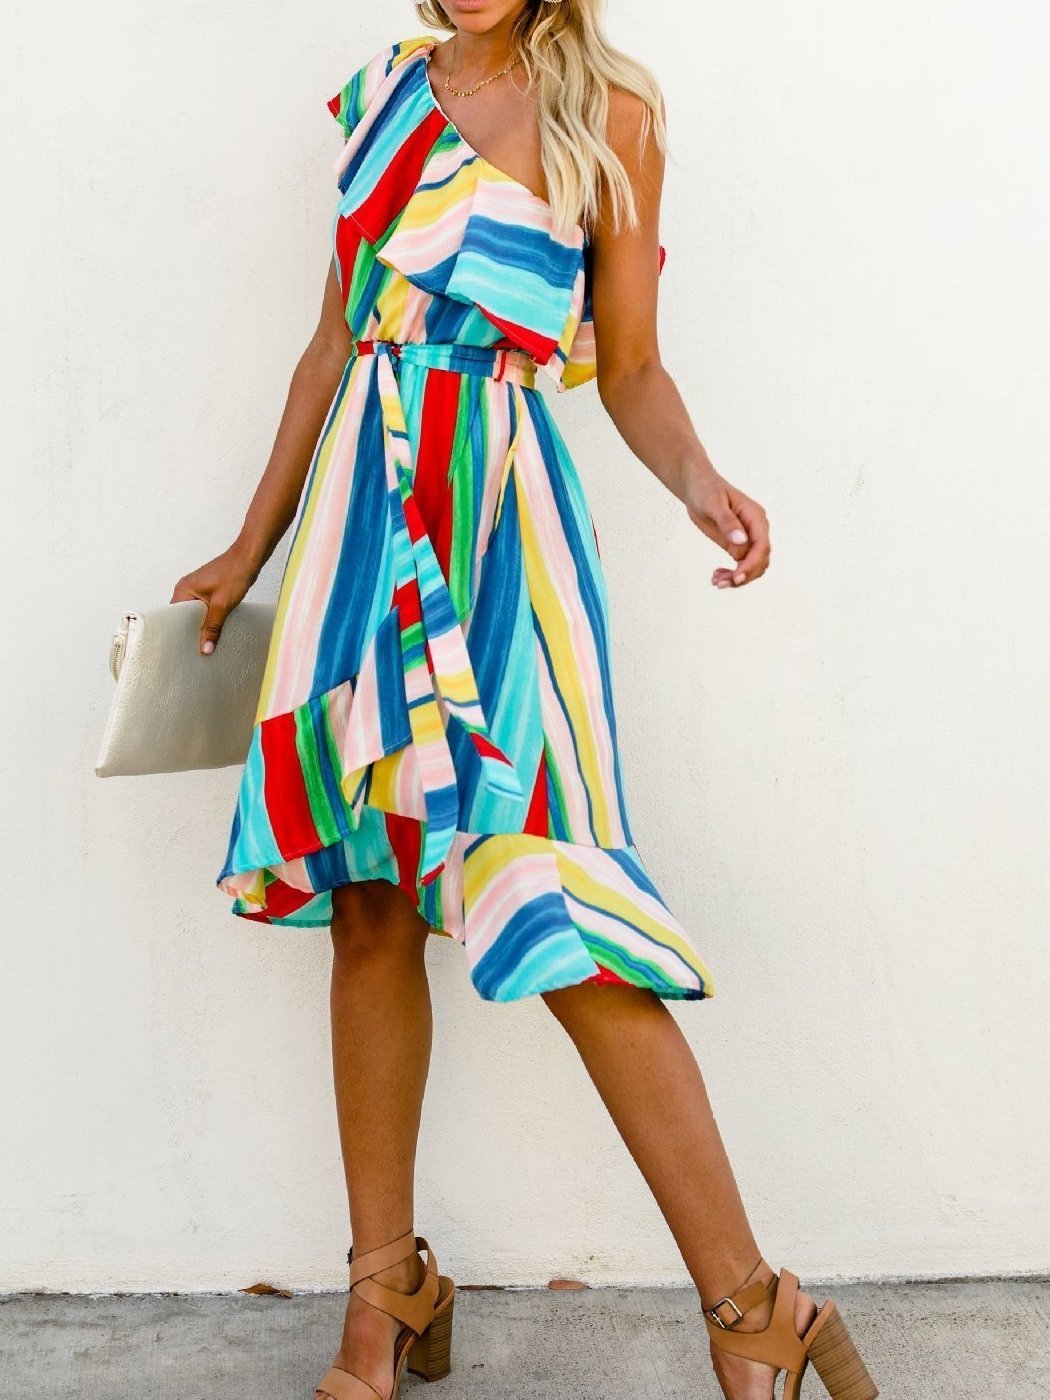 Sloping Shoulder Strapless Lace-Up Irregular Rainbow Striped Dress